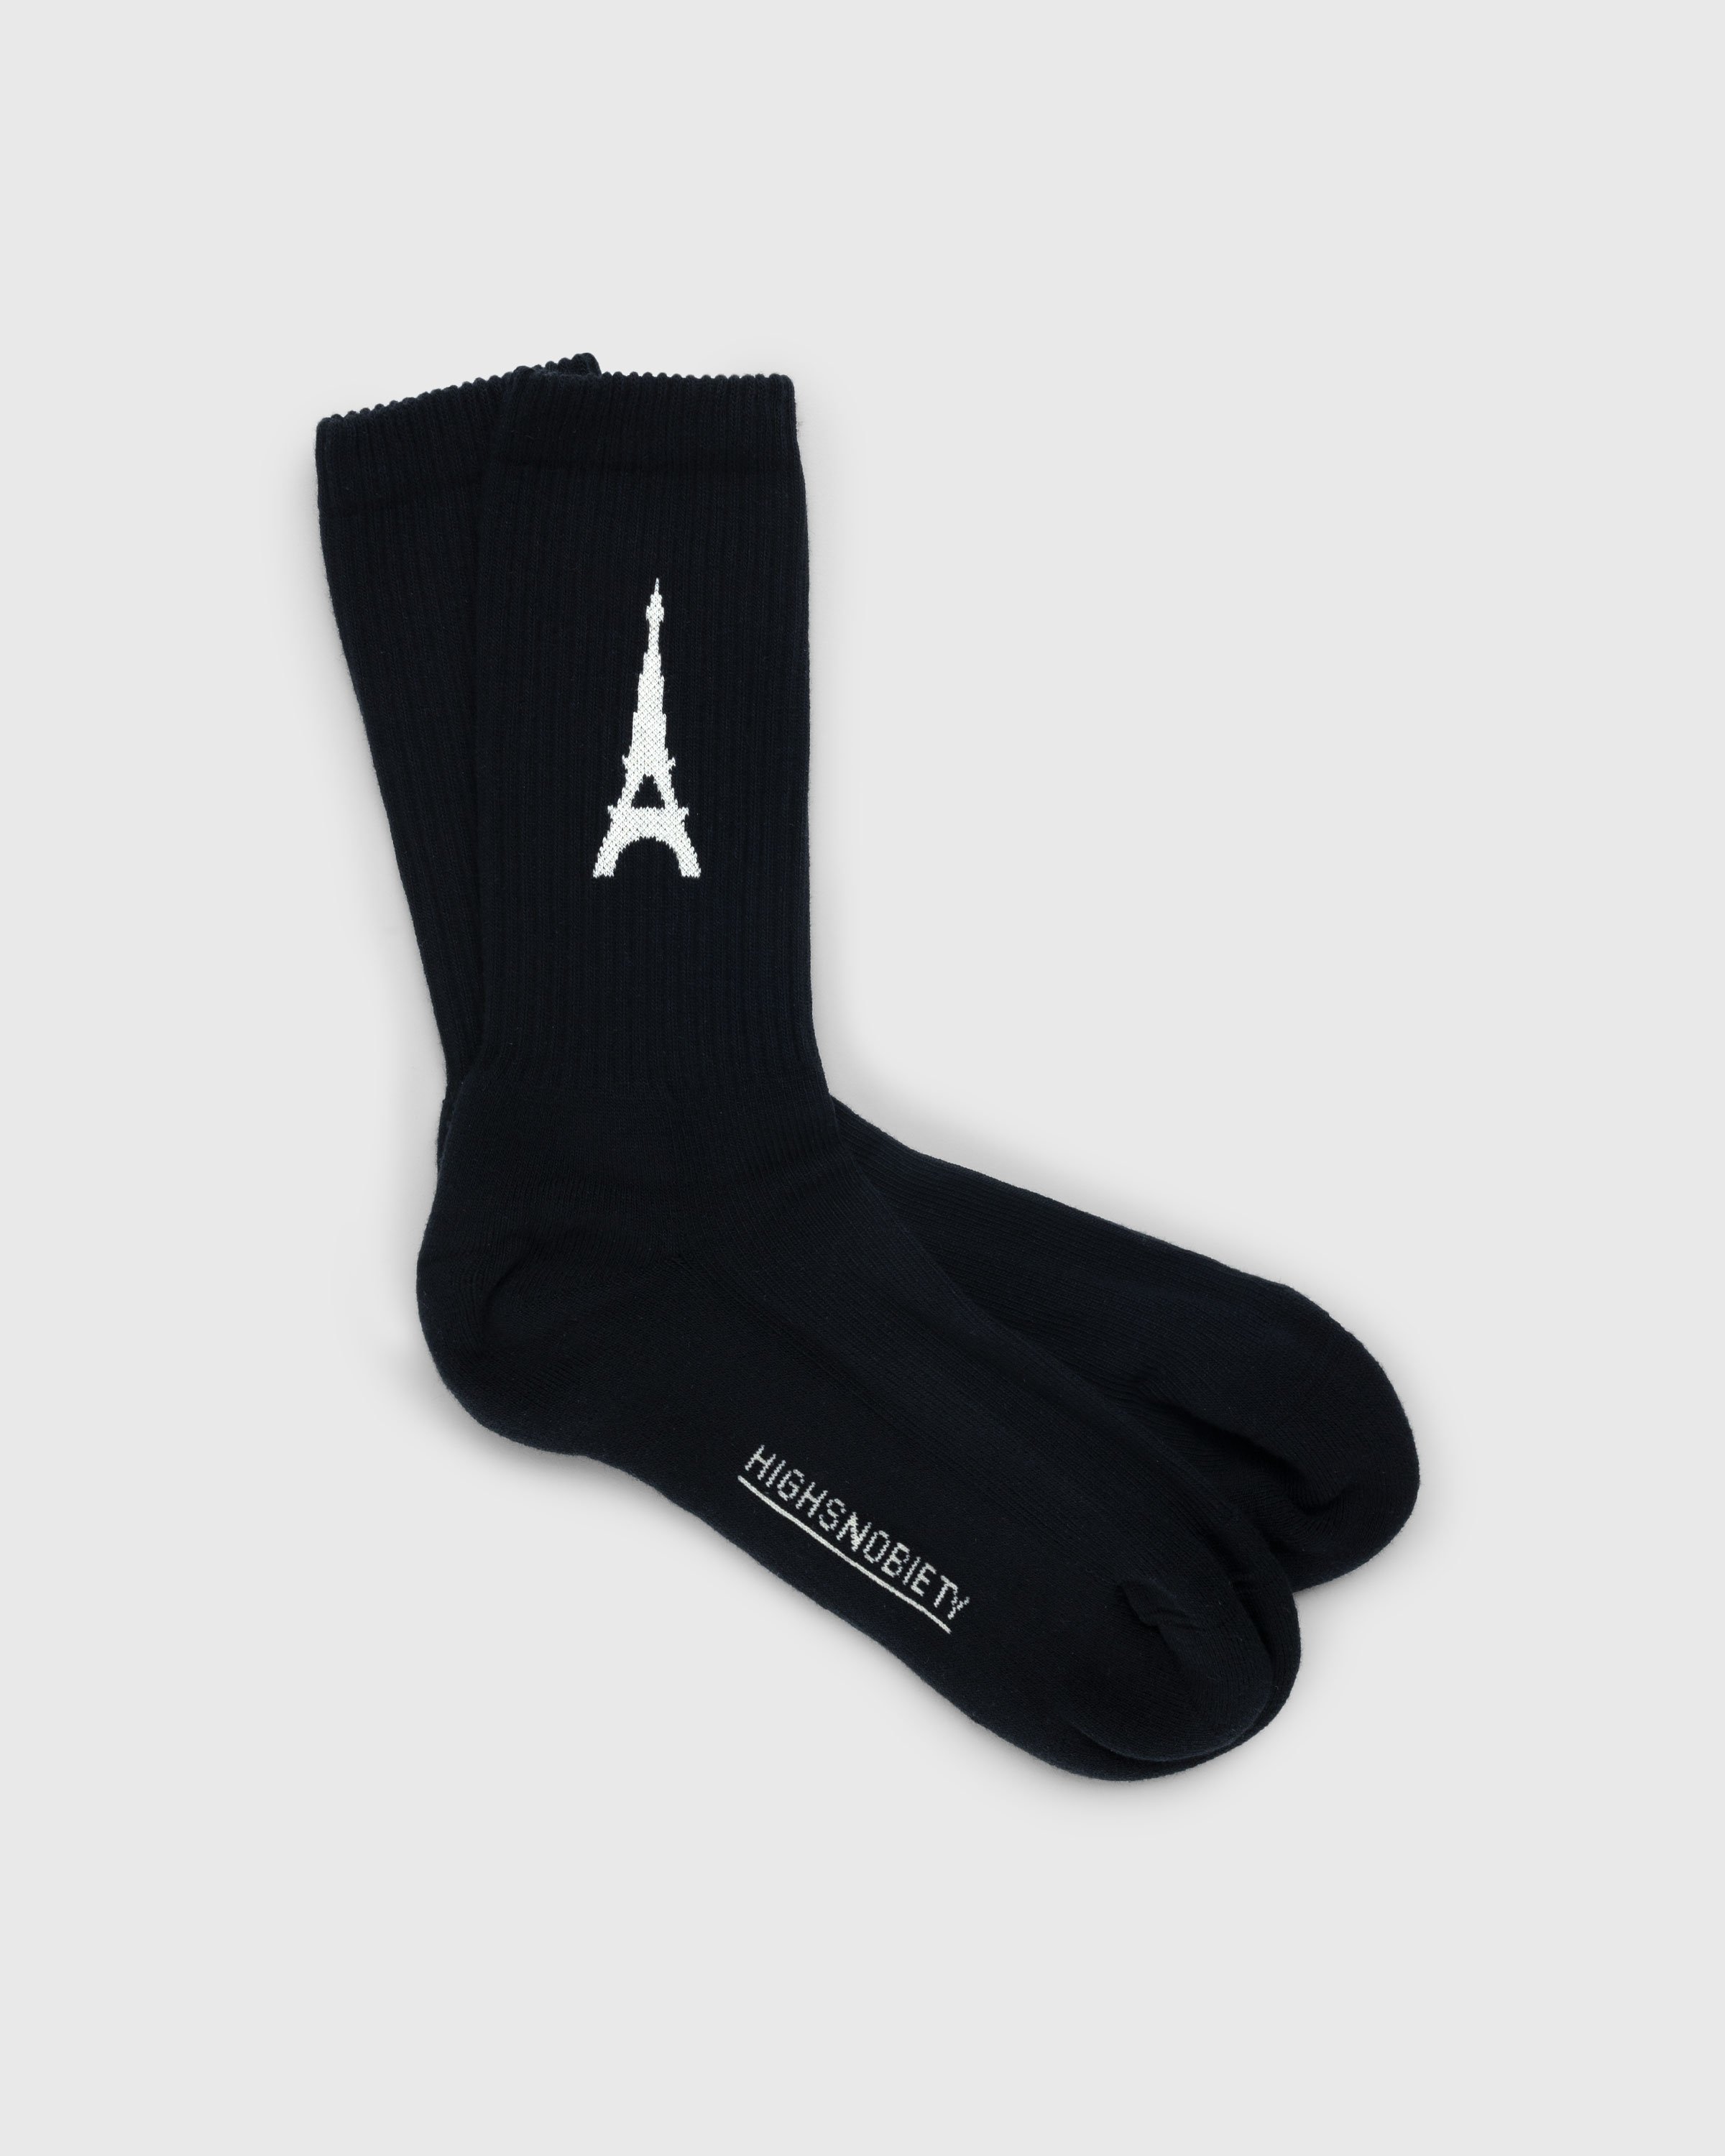 Highsnobiety - Not in Paris 5 Paris Socks Black - Accessories - Black - Image 1